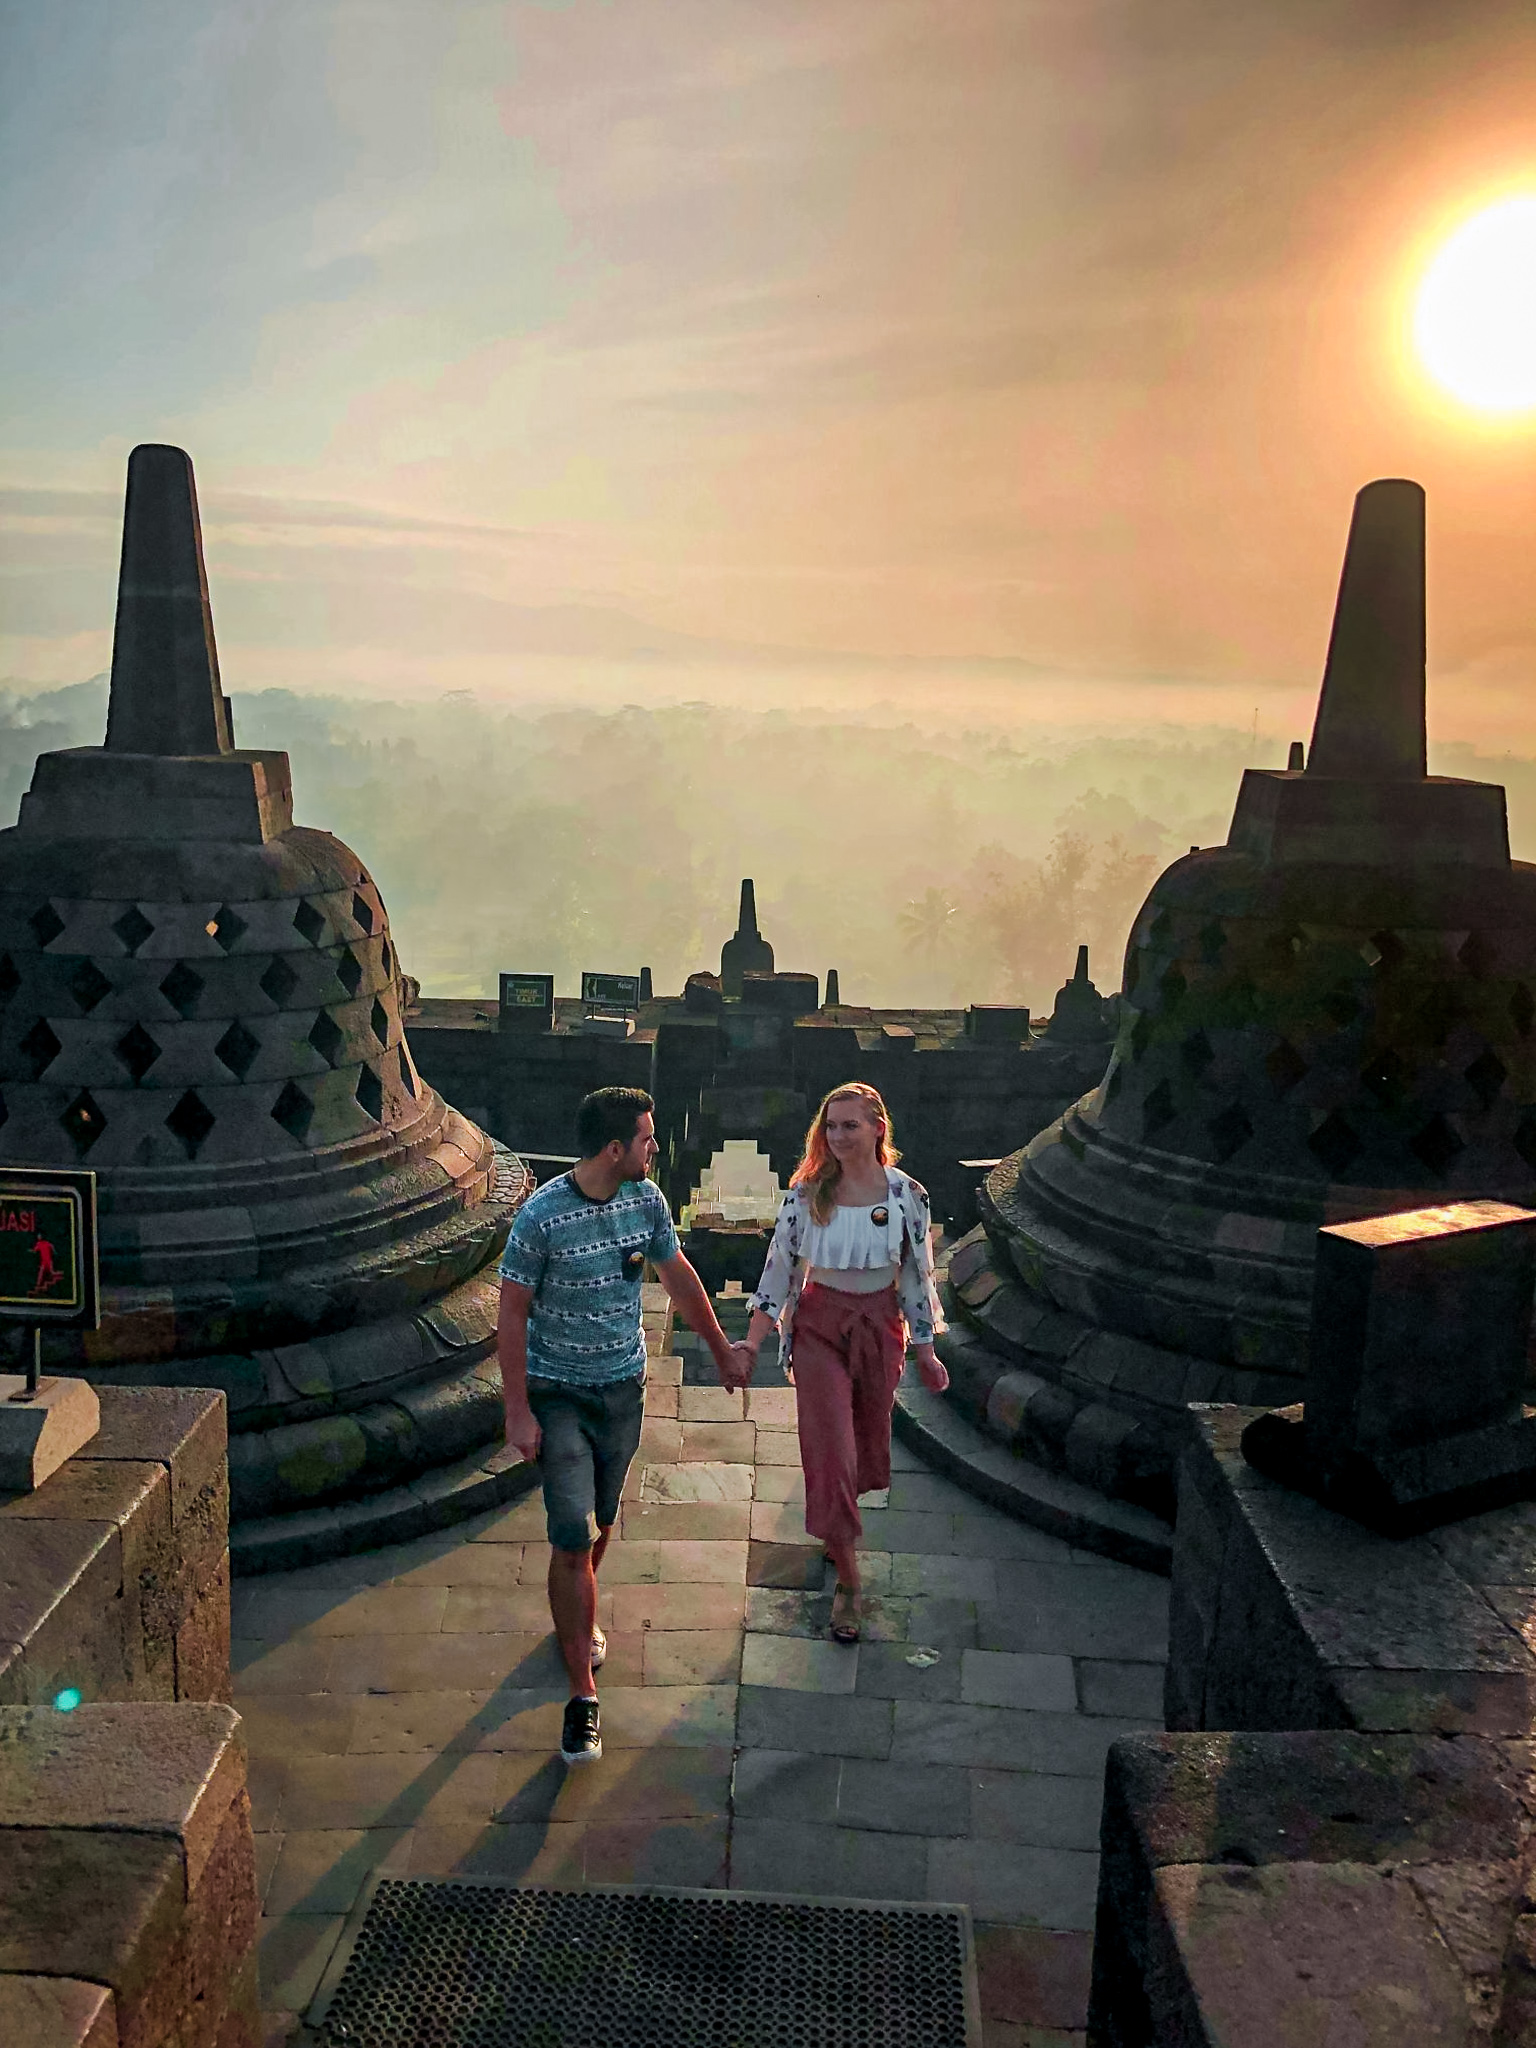 Sunrise at the Borobudur temple in Yogyakarta